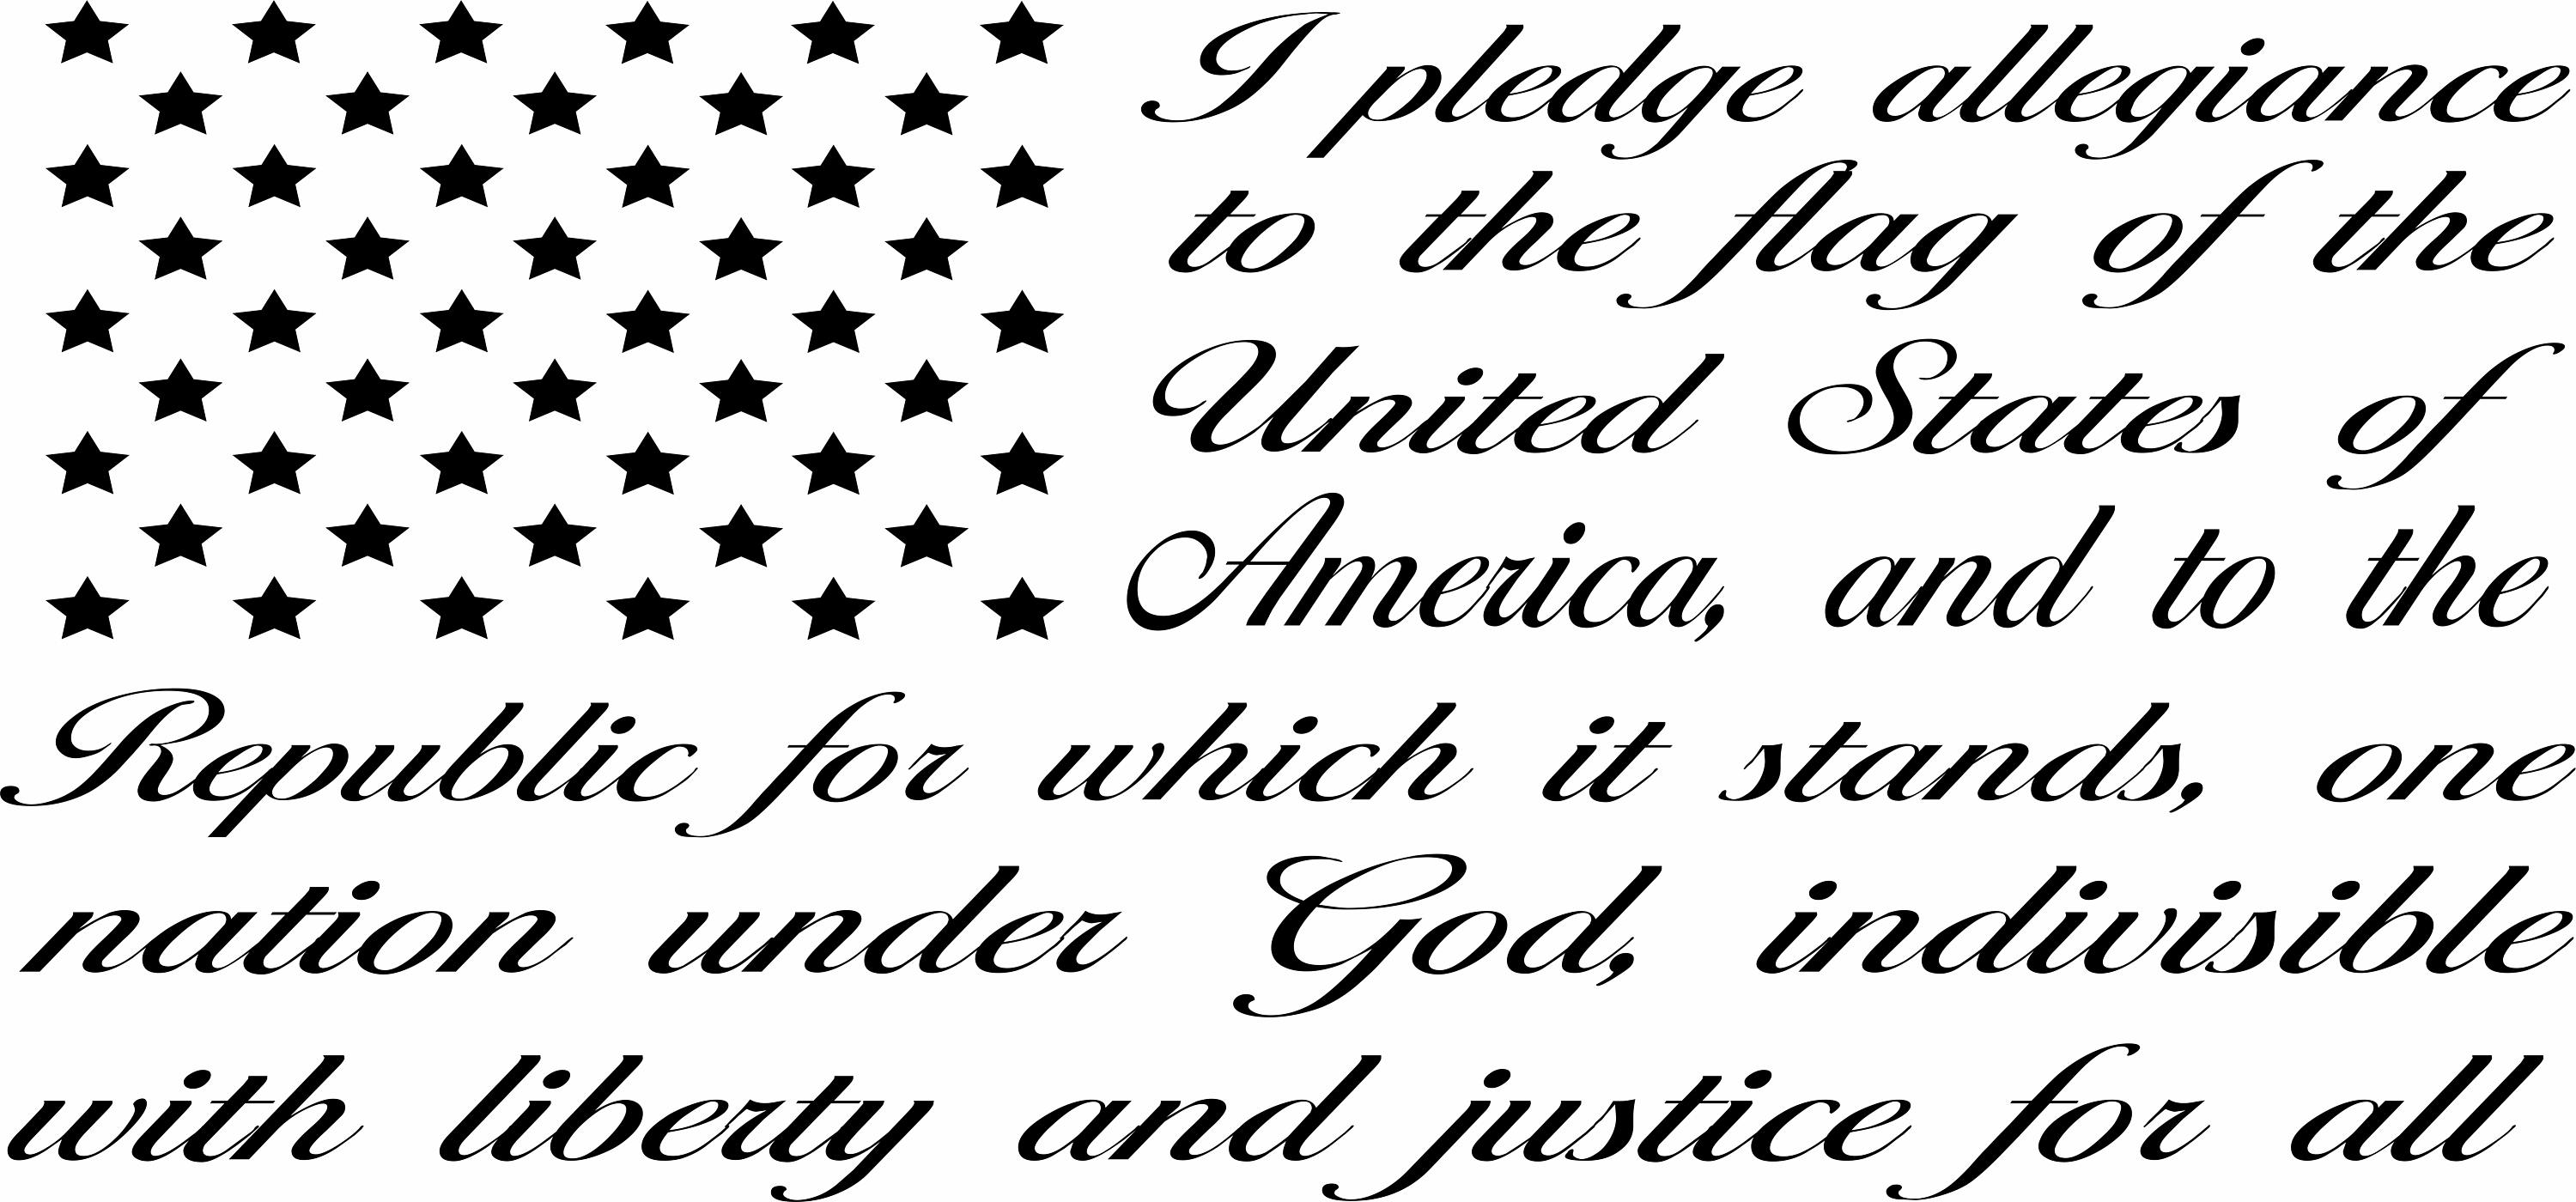 Download Indoor Wall Vinyl Pledge of Allegiance American Flag car decal